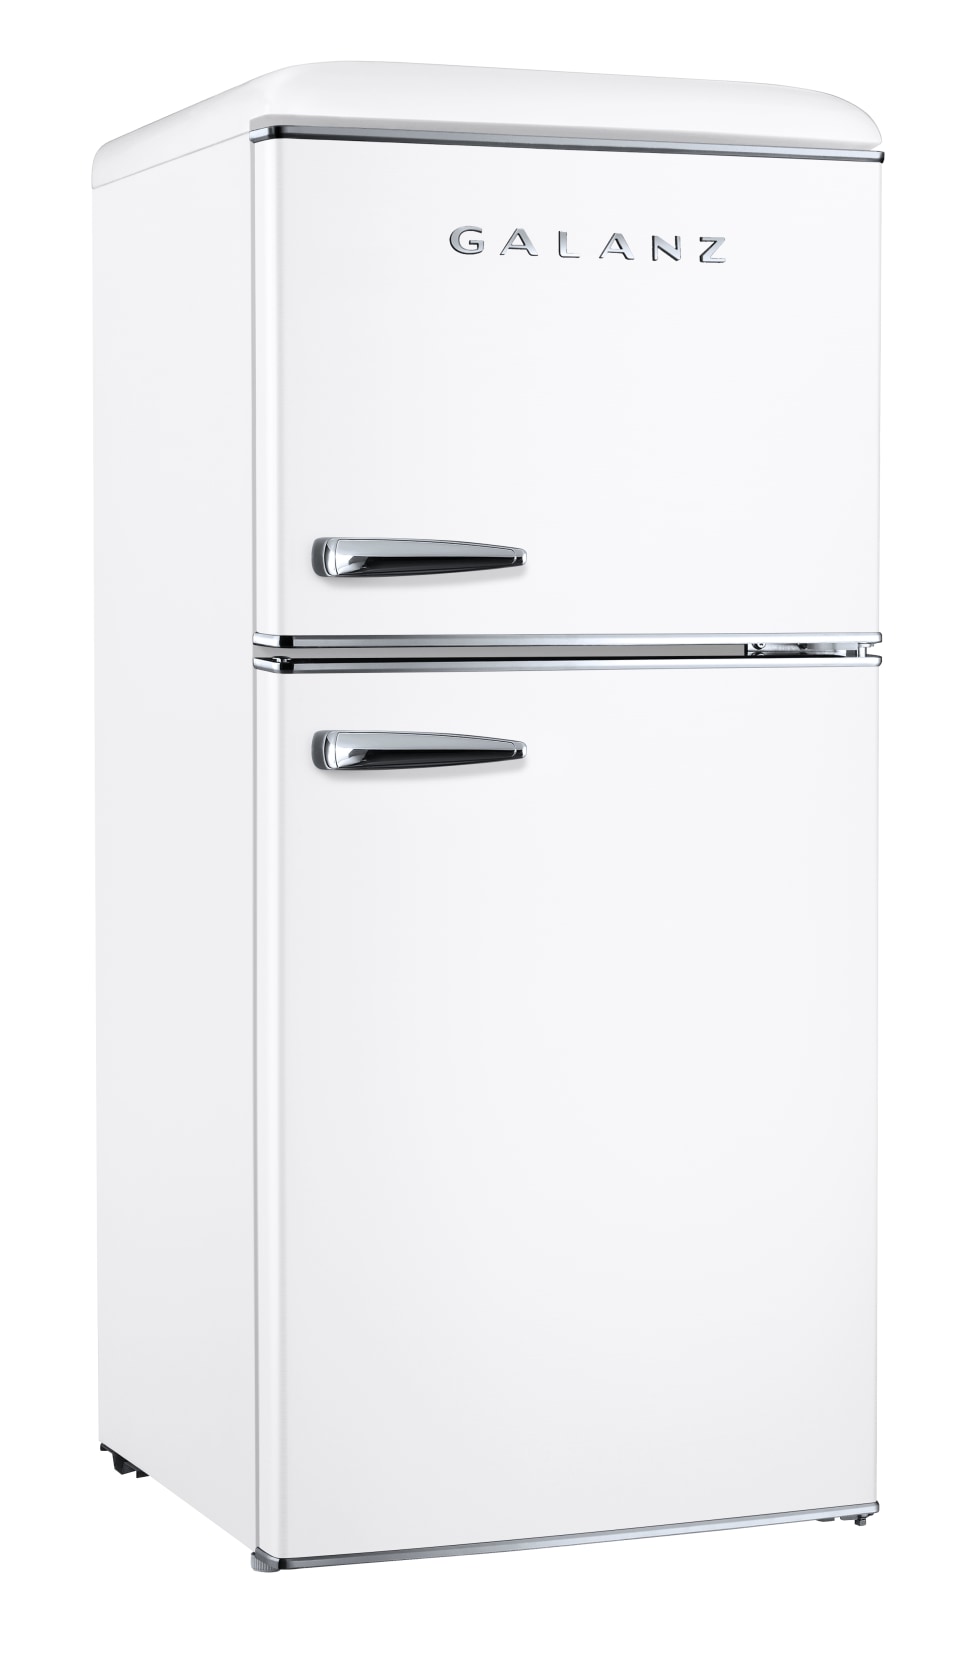 42+ Galanz mini fridge with freezer temperature control ideas in 2021 